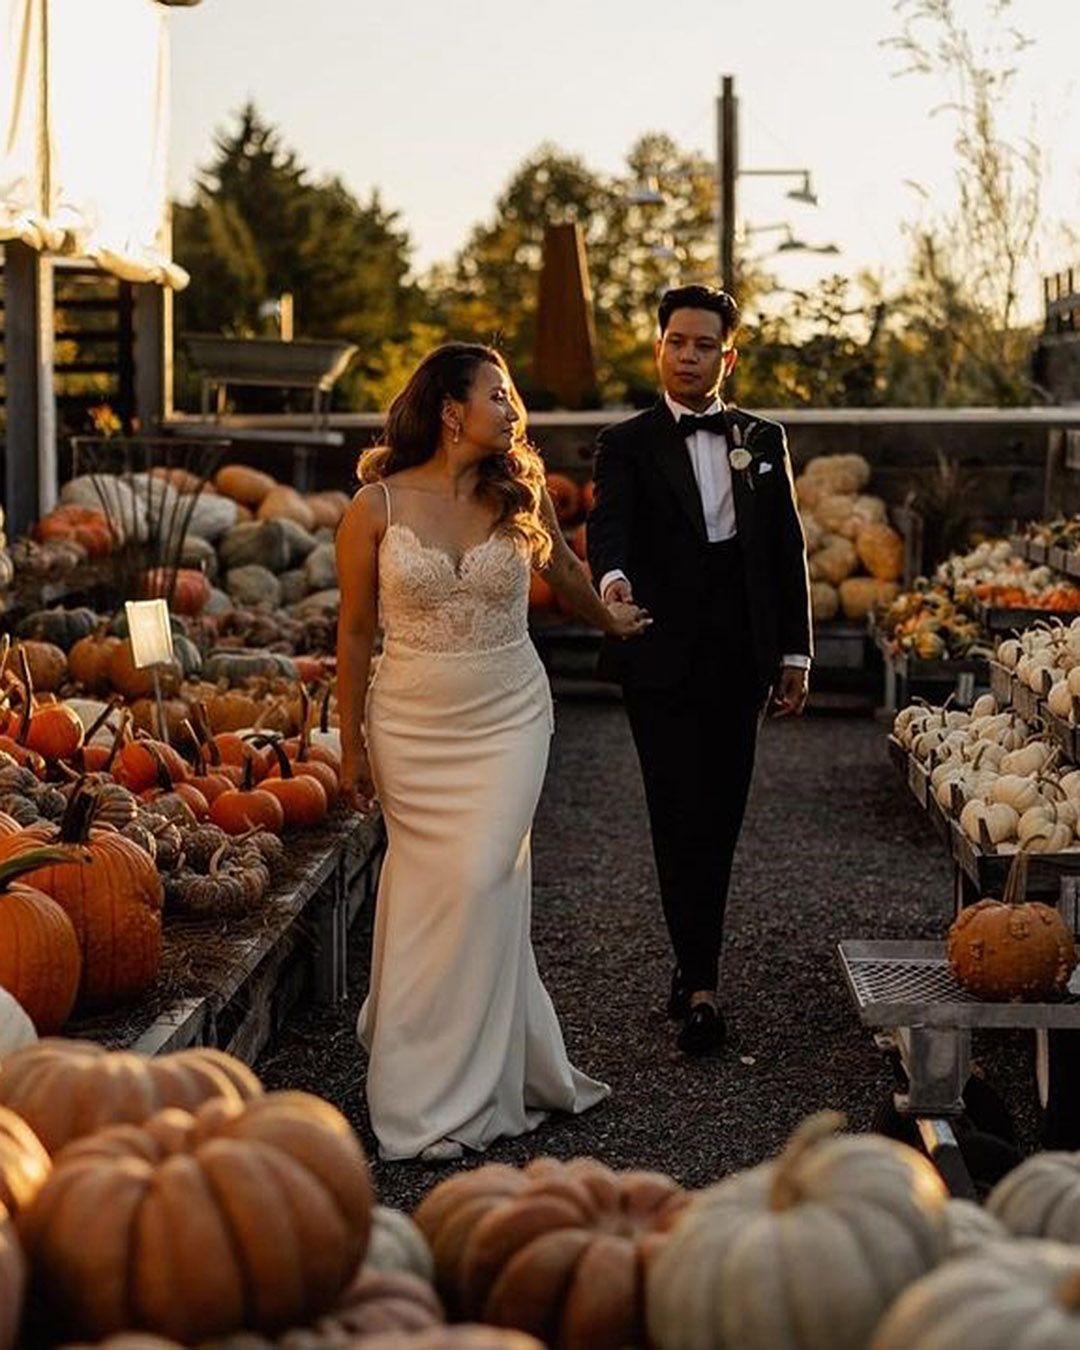 fall wedding newlyweds wedding decor pumpkins